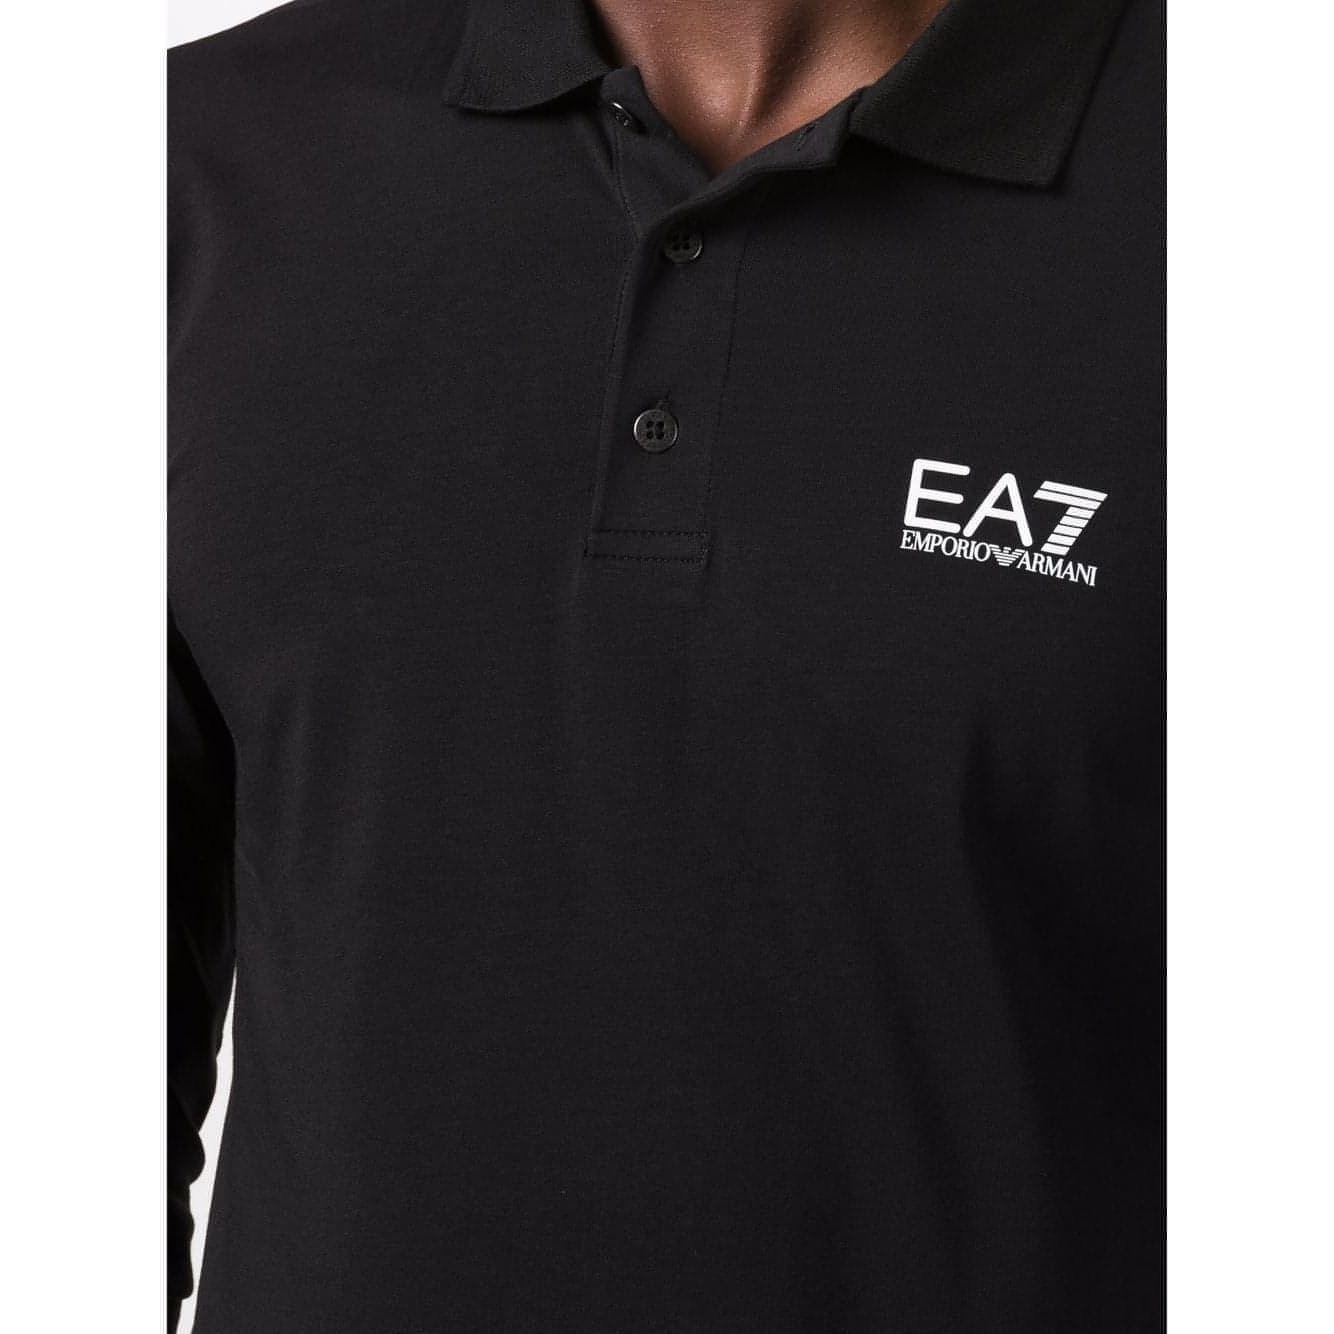 EA7 vyriški juodi marškinėliai ilgomis rankovėmis